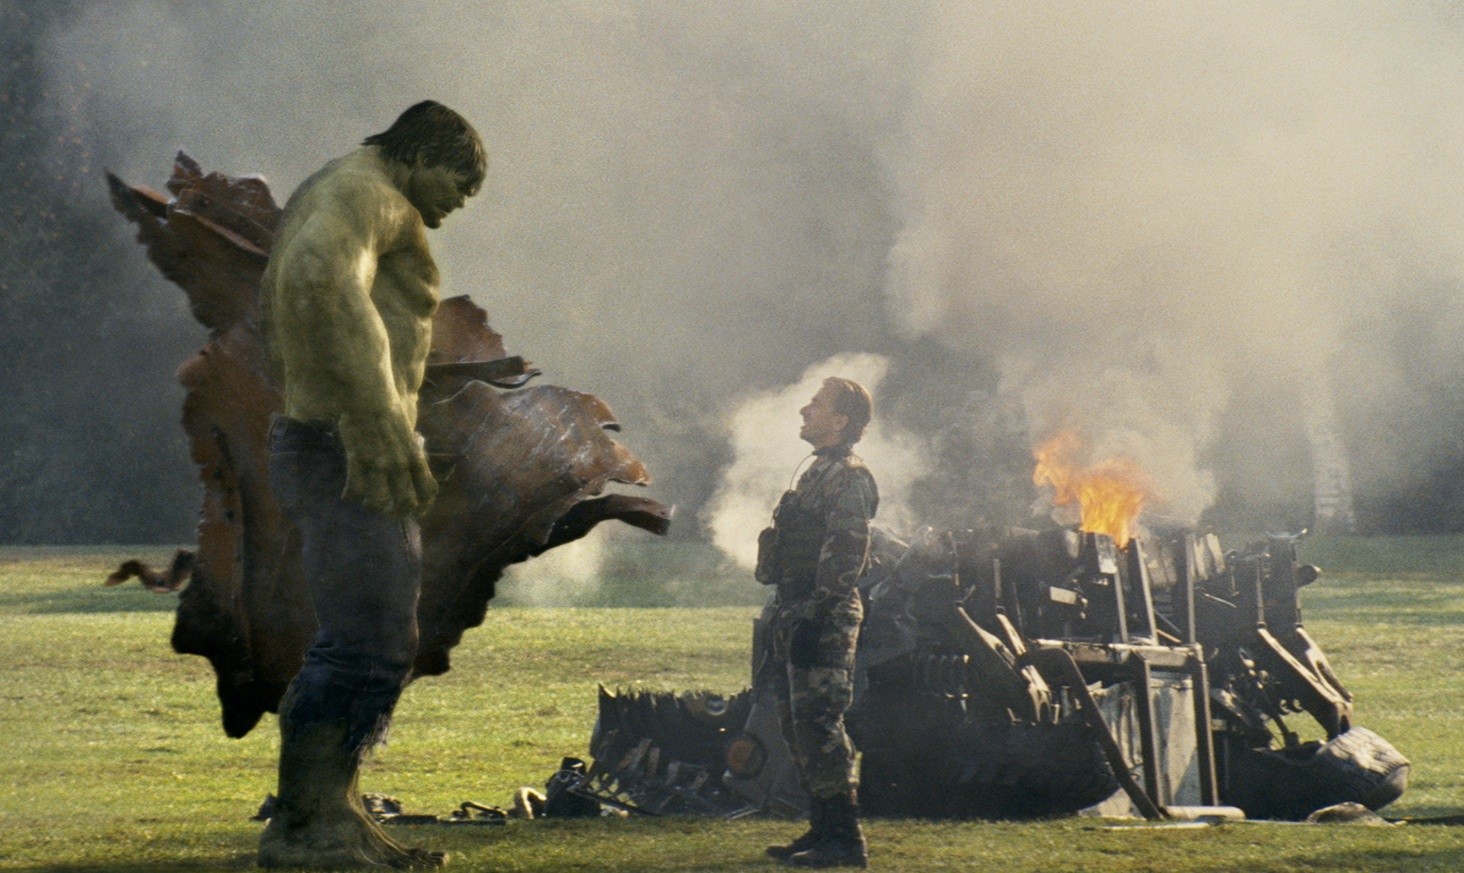 Edward Norton as The Incredible Hulk